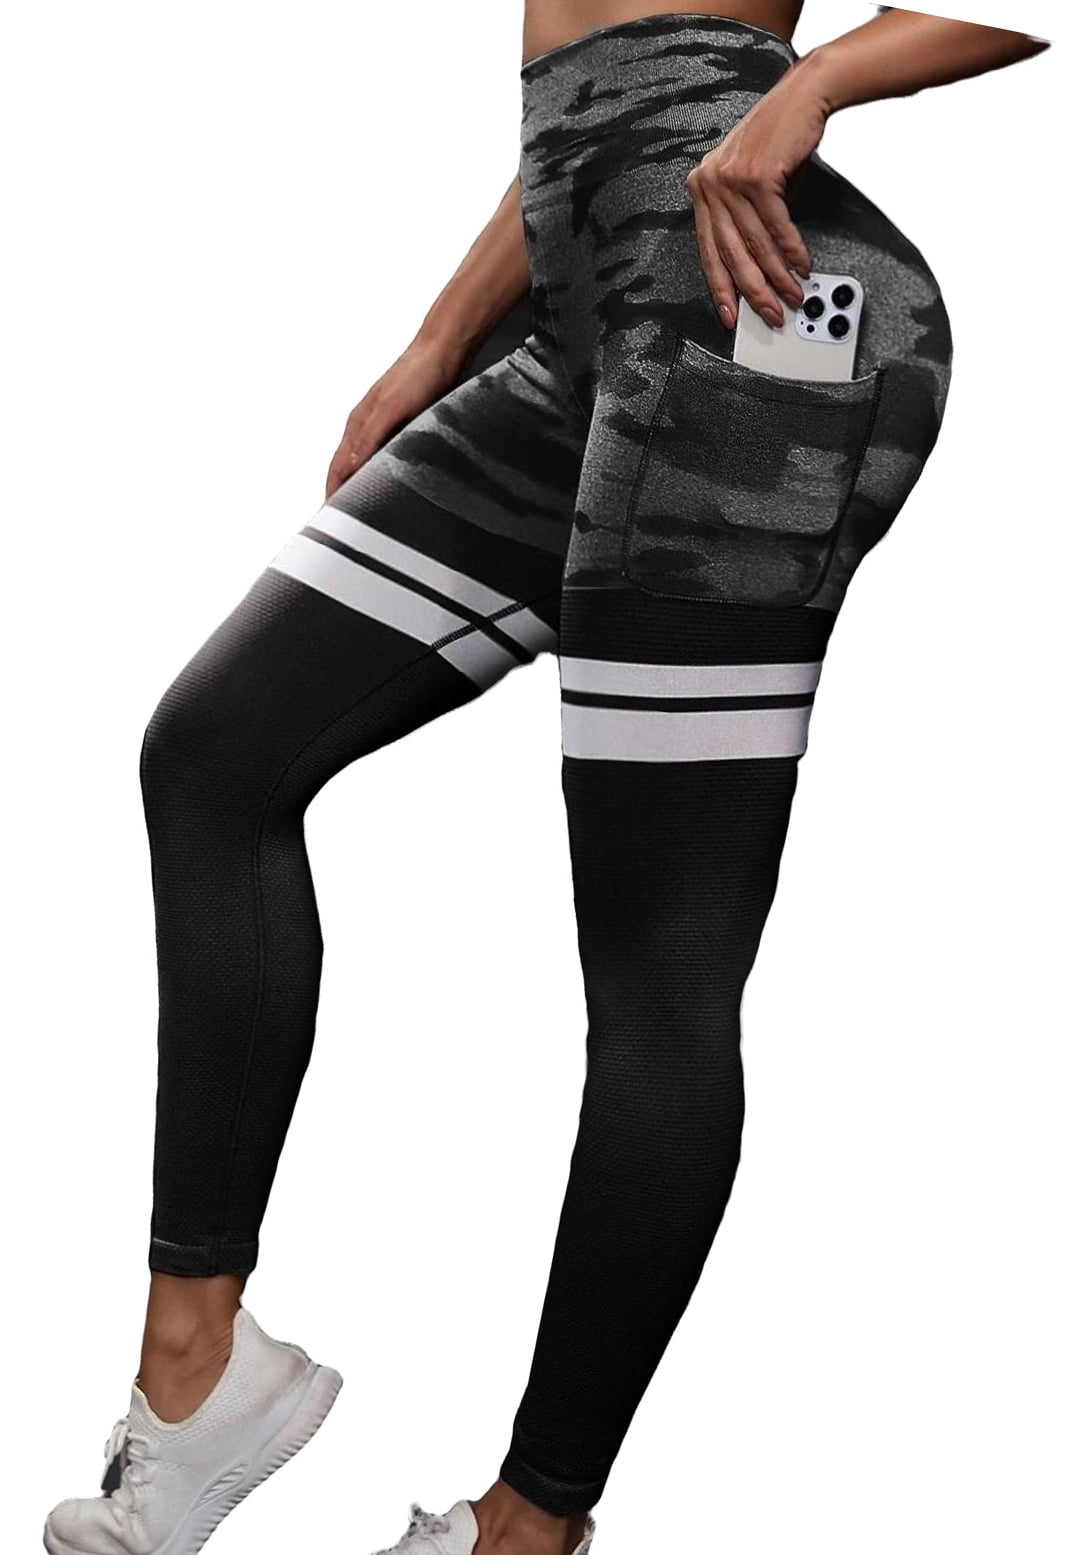 Camo Regular Black Leggings With Women's Sports Phone Pocket (Women's) 